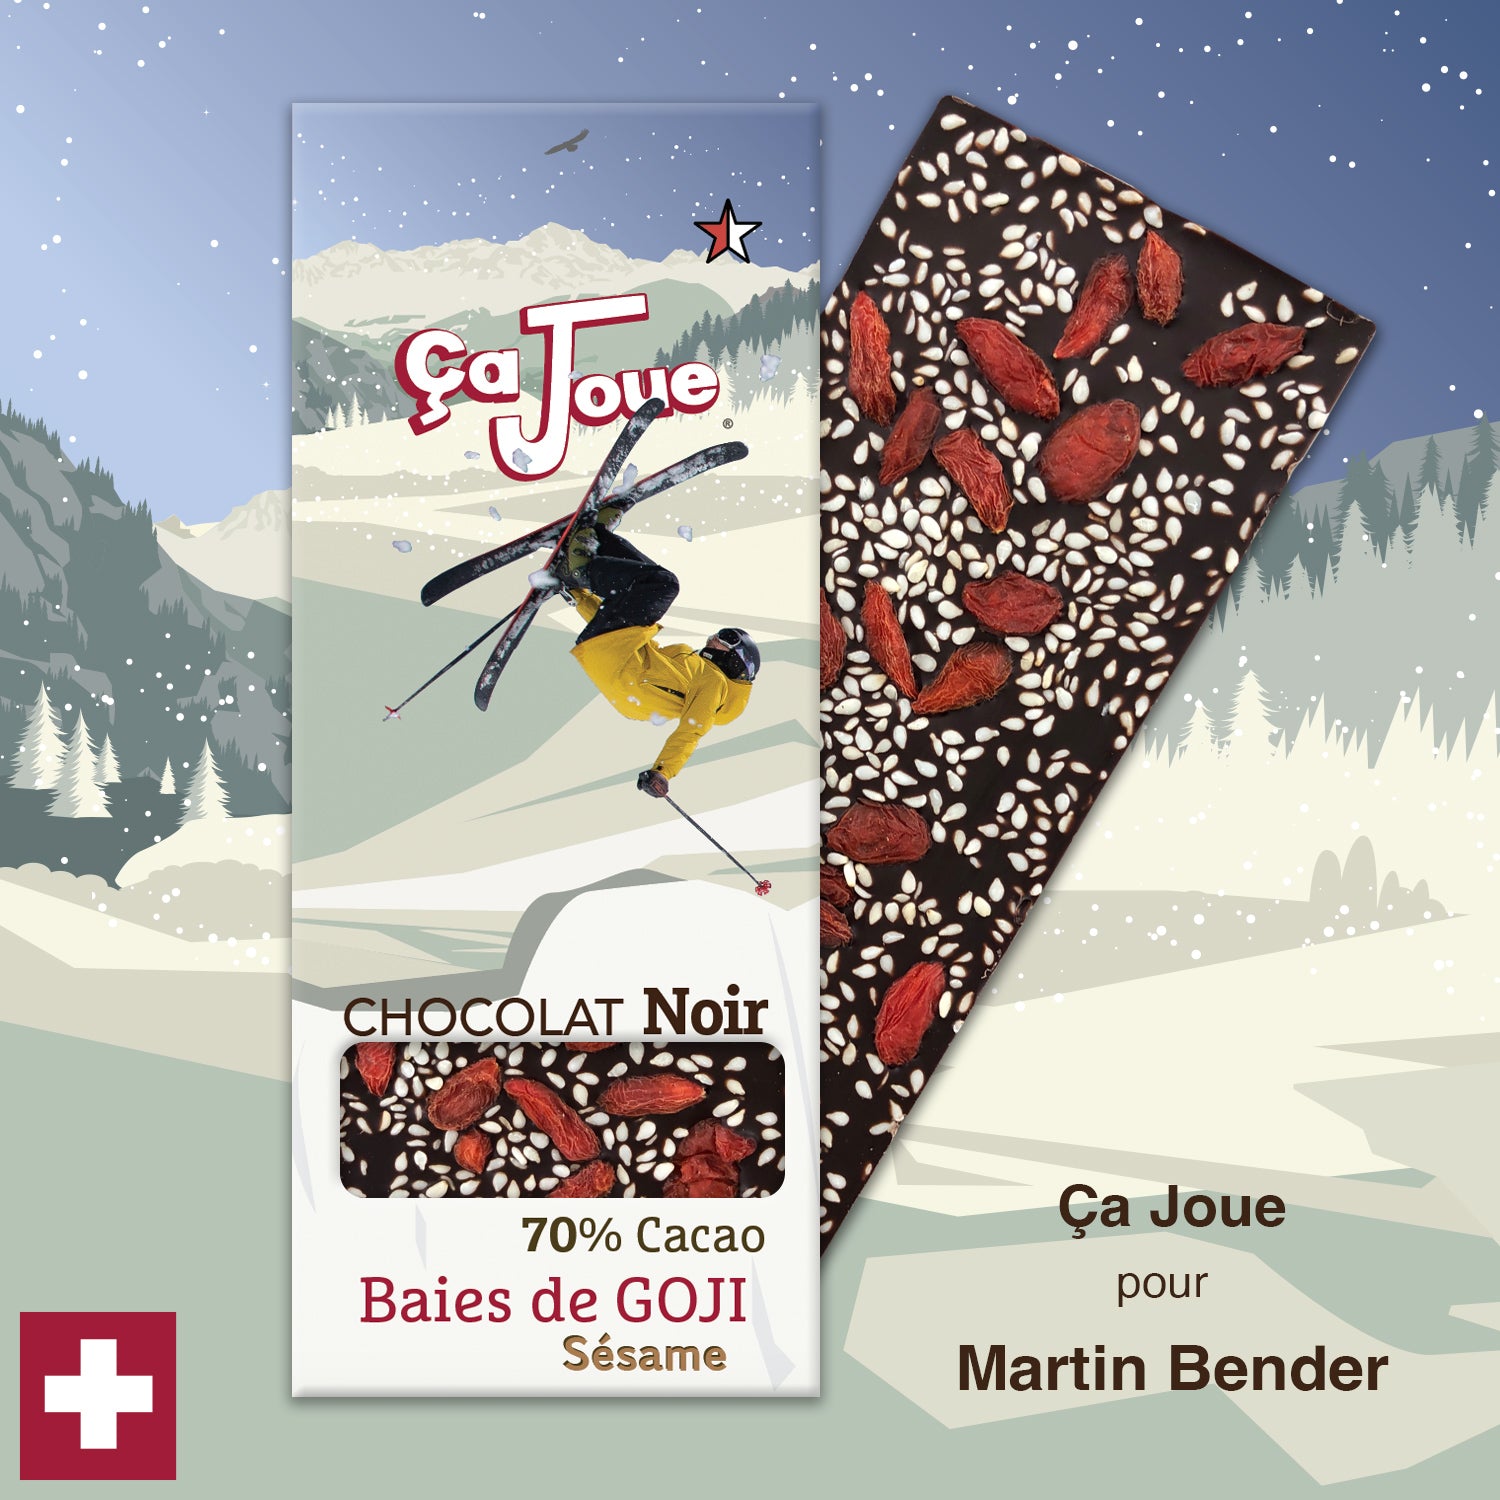 Ça Joue for Martin Bender (Ref-BN4) Chocolate from Val de Bagnes